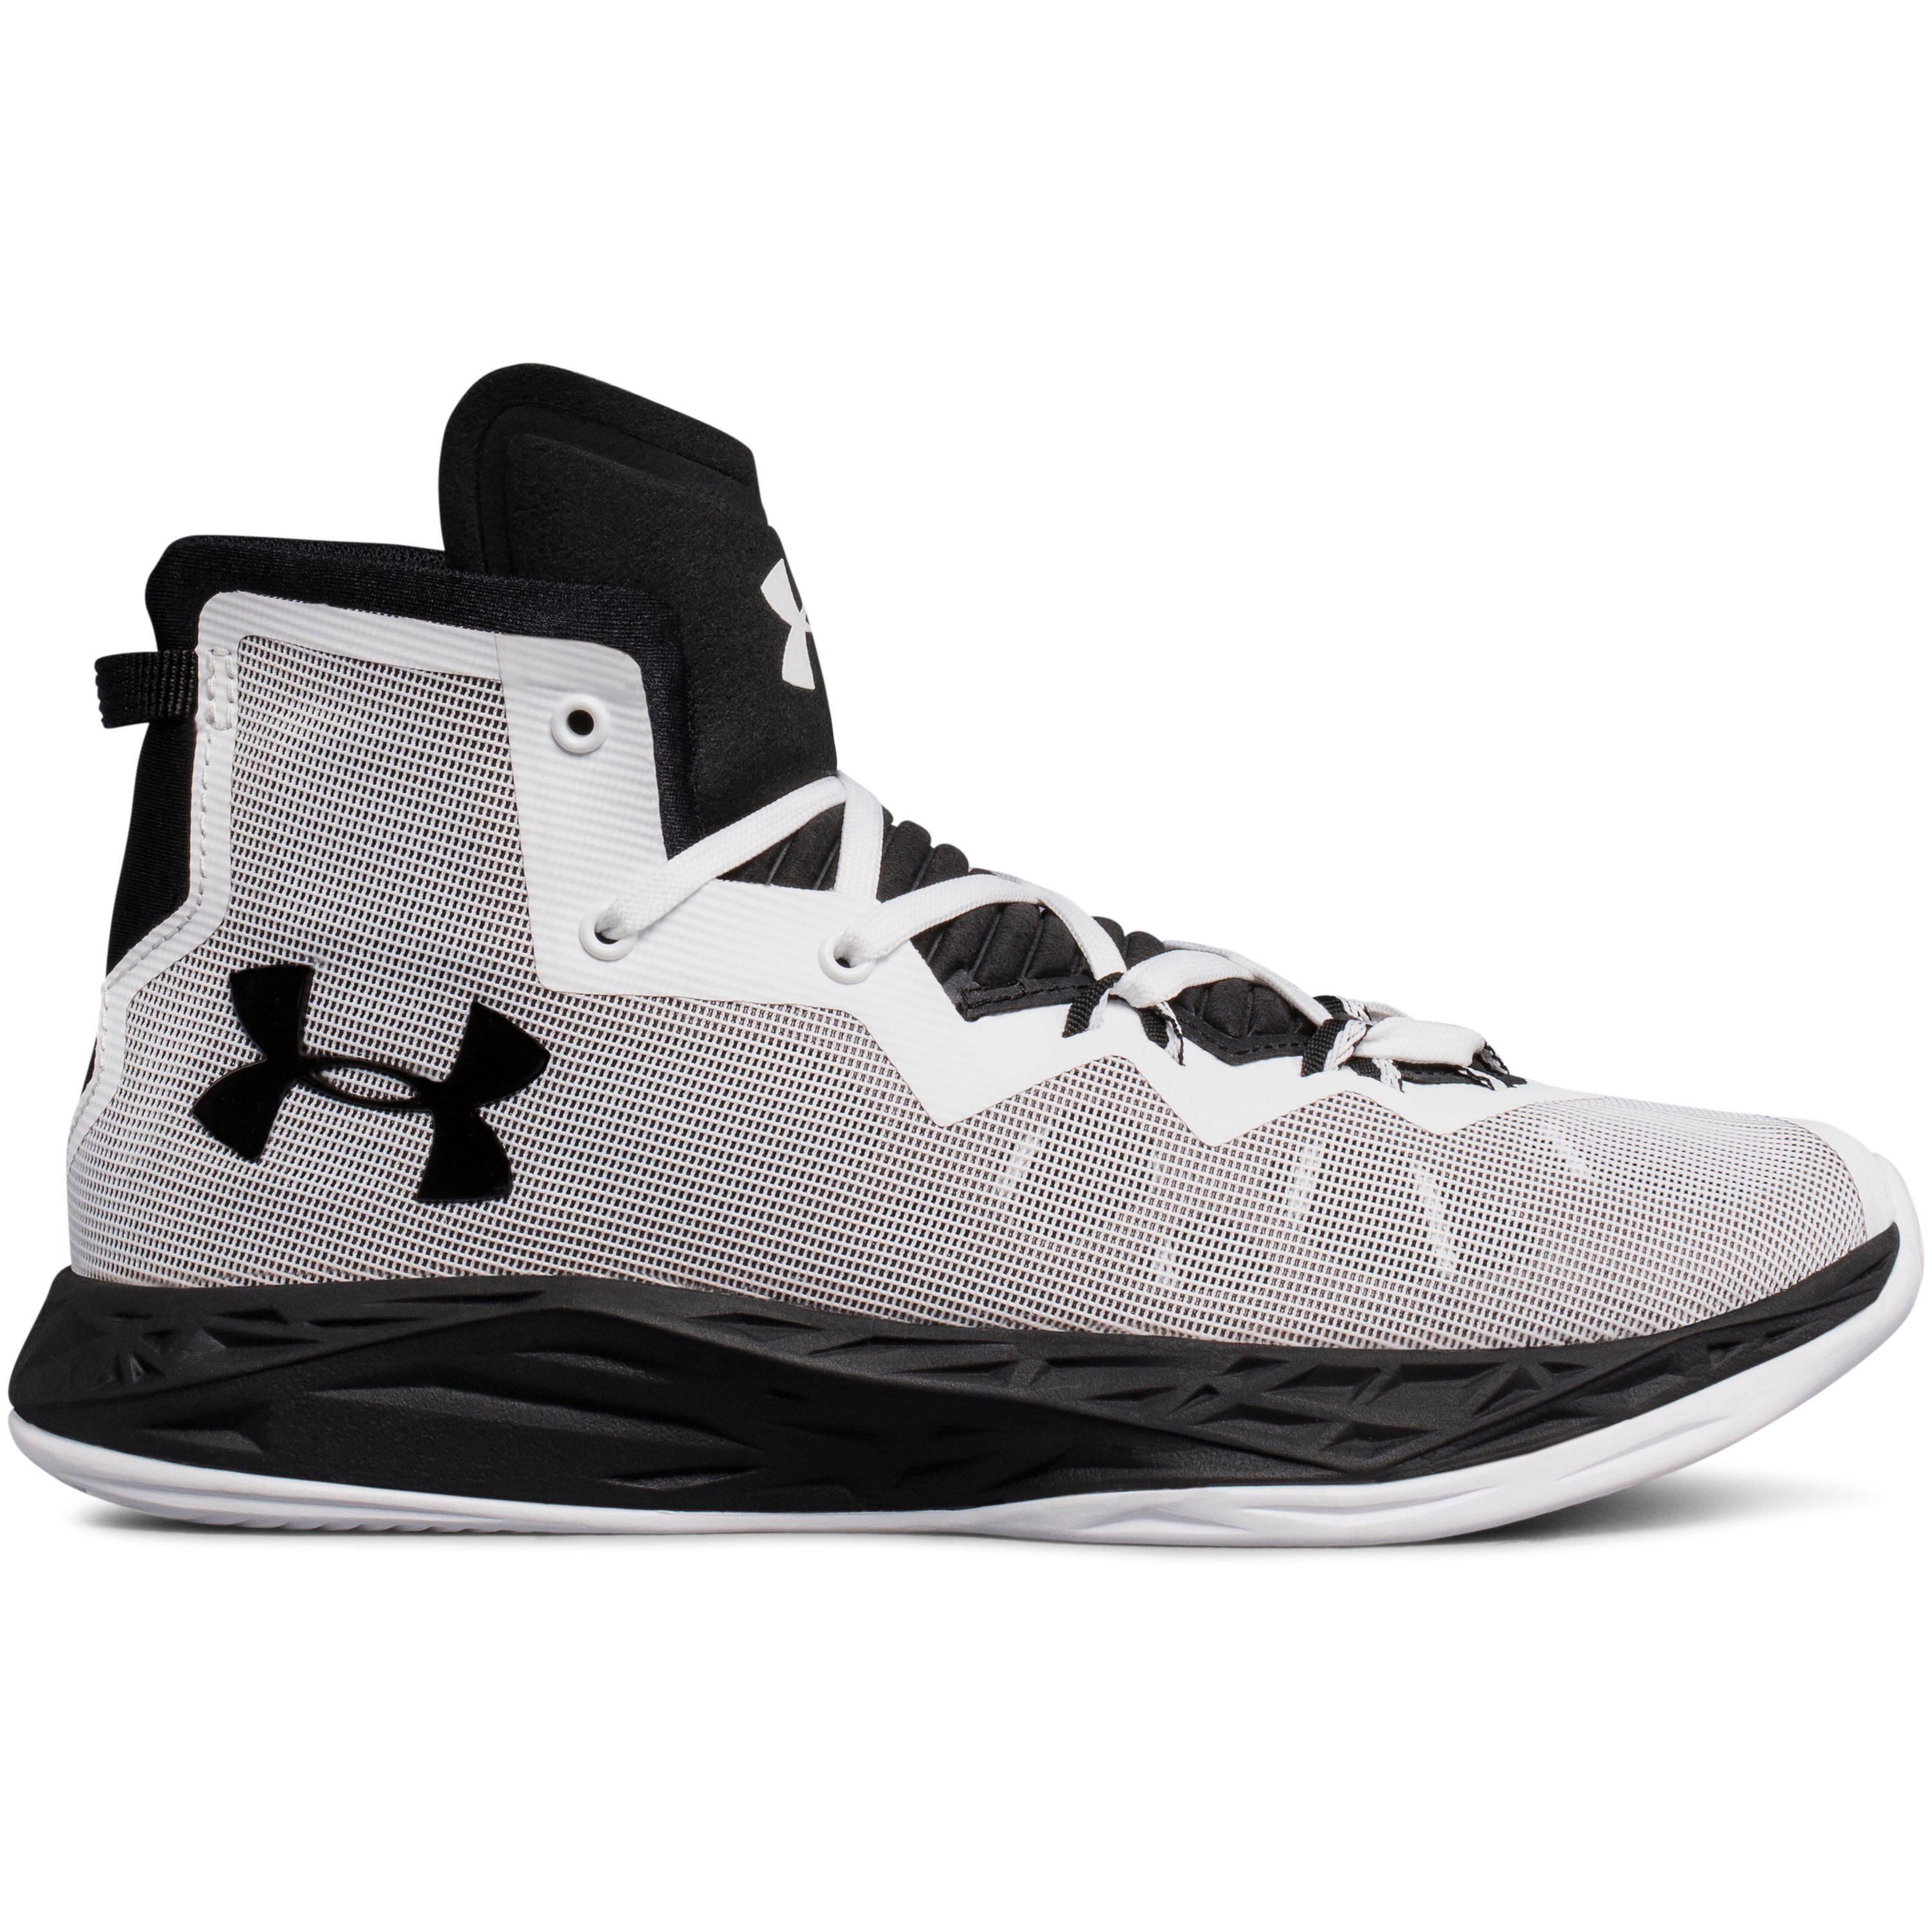 Under Armour Women's Ua Lightning 4 Basketball Shoes in White/Black ...